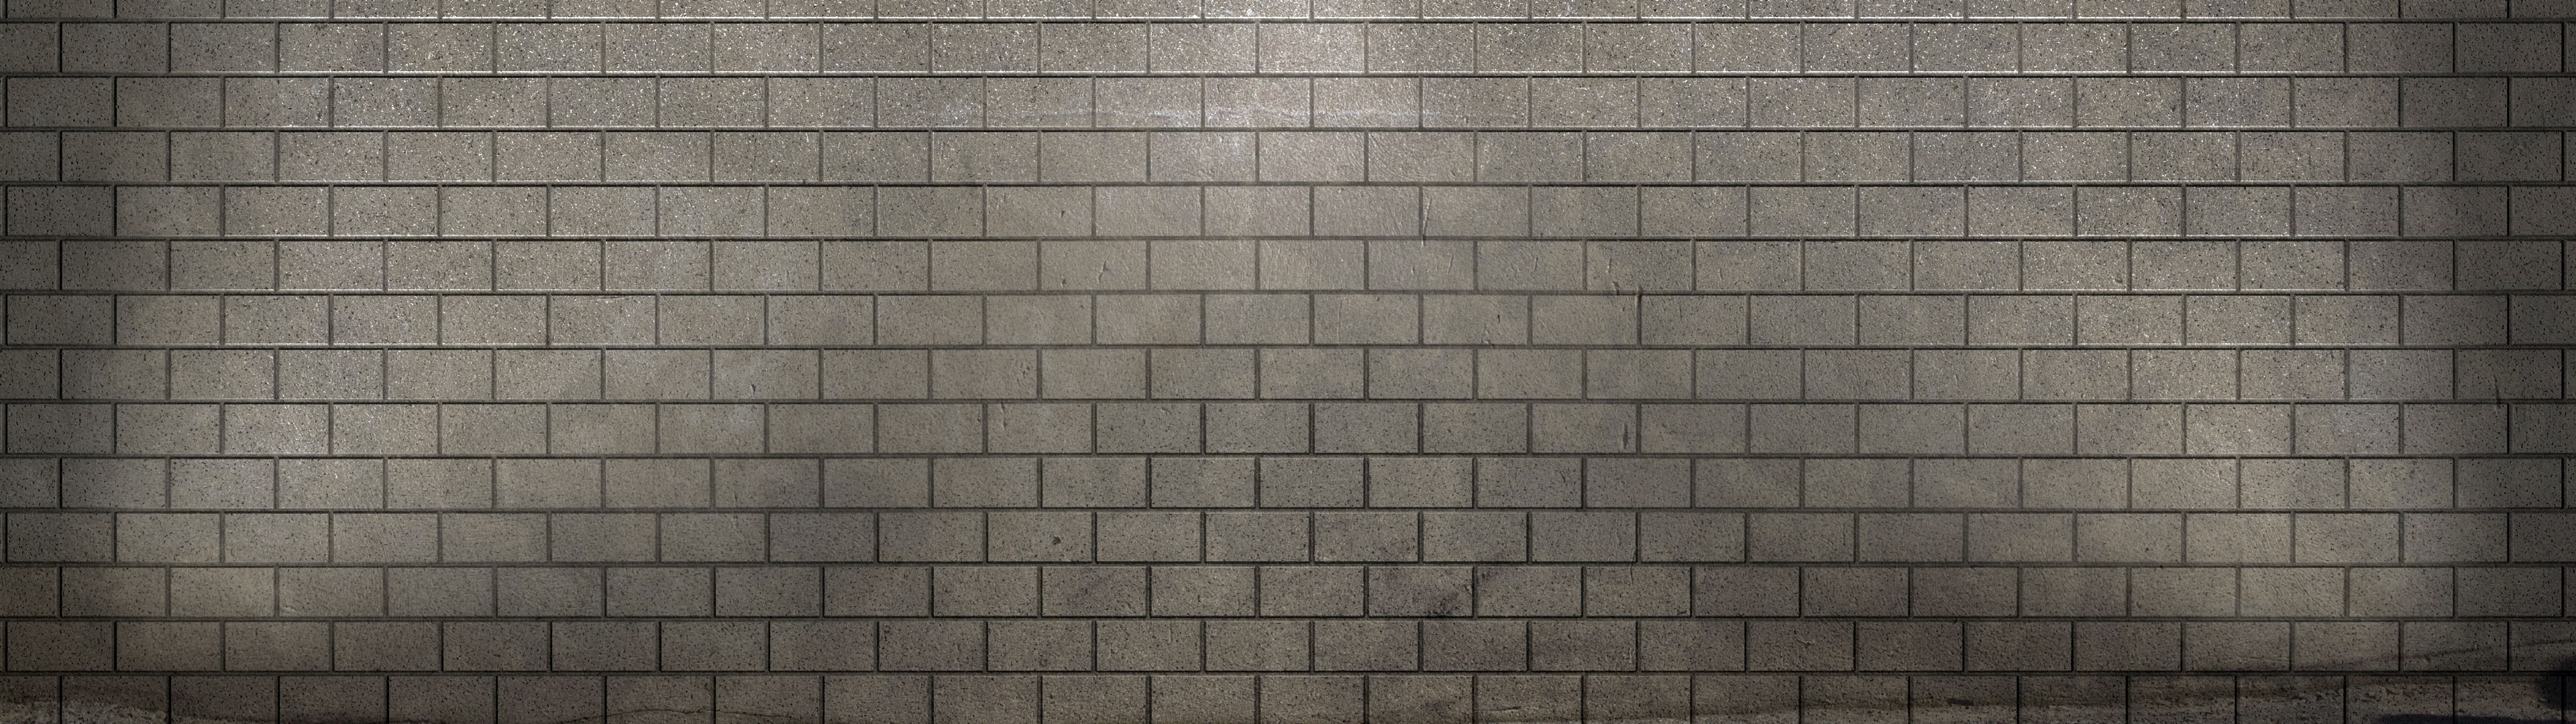 textures, bricks, brick wall - desktop wallpaper